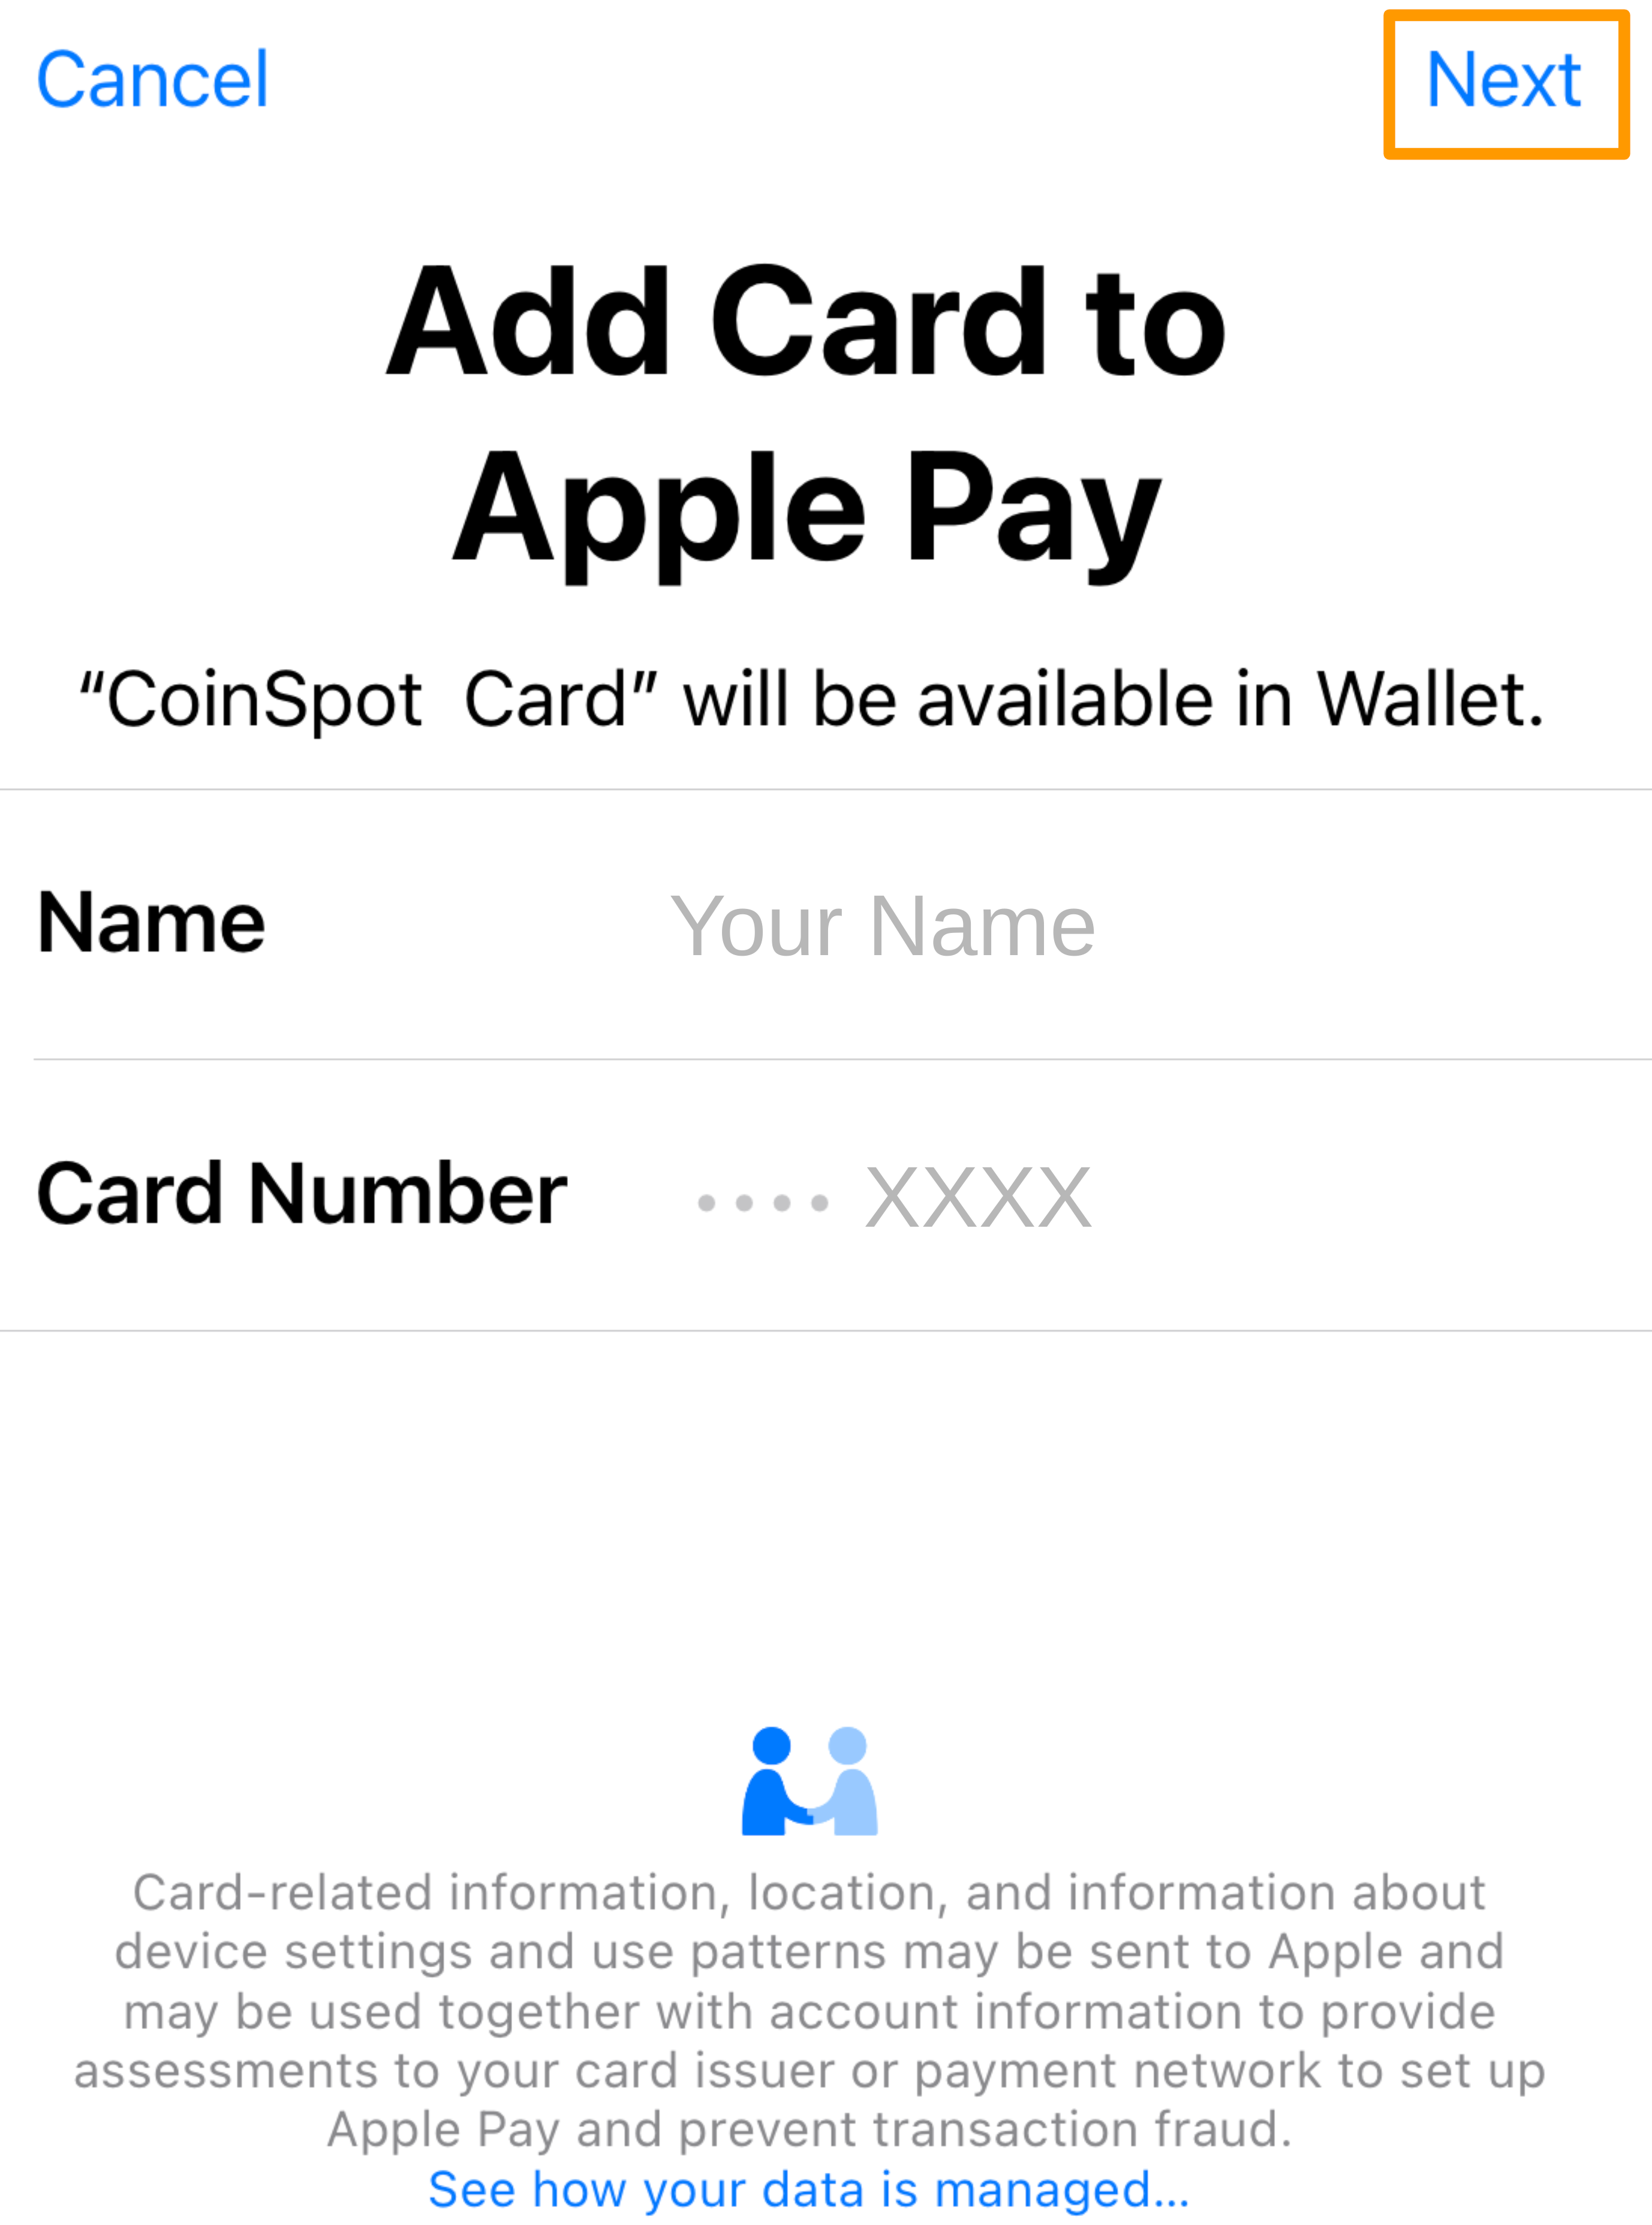 CS_Card_-_Apple_Pay_-_Add_Card.png